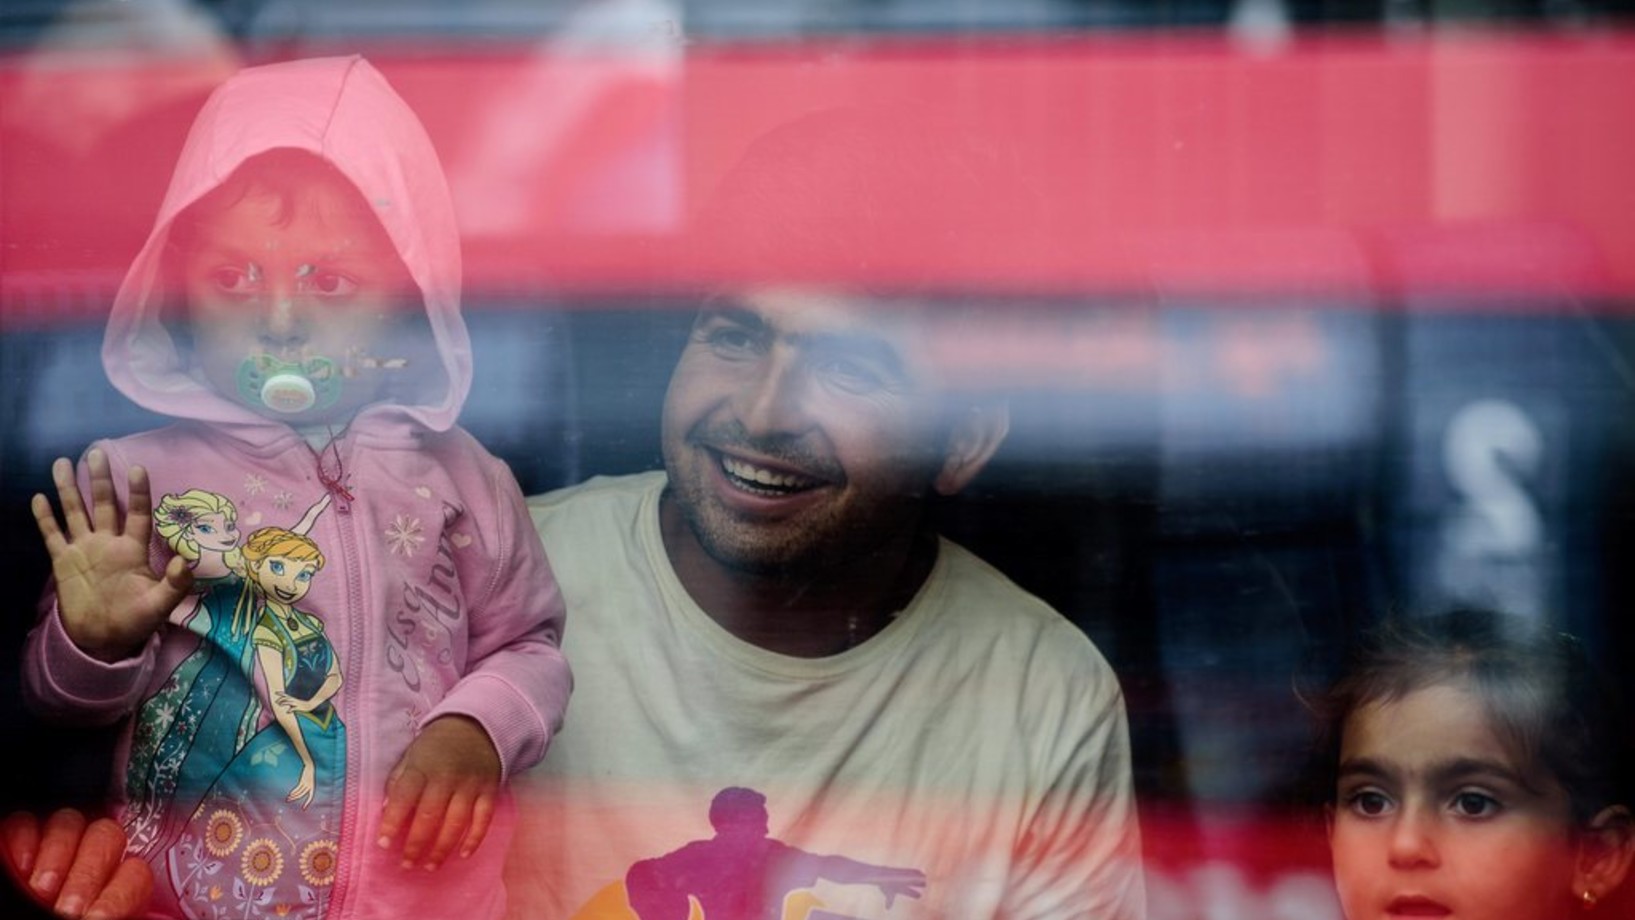 Freudige Gesichter, dem Krieg in Syrien entronnen: Ankunft einer Flüchtlingsfamilie im Müncher Hauptbahnhof. (Foto: Keystone/EPA/Nicolas Armer)